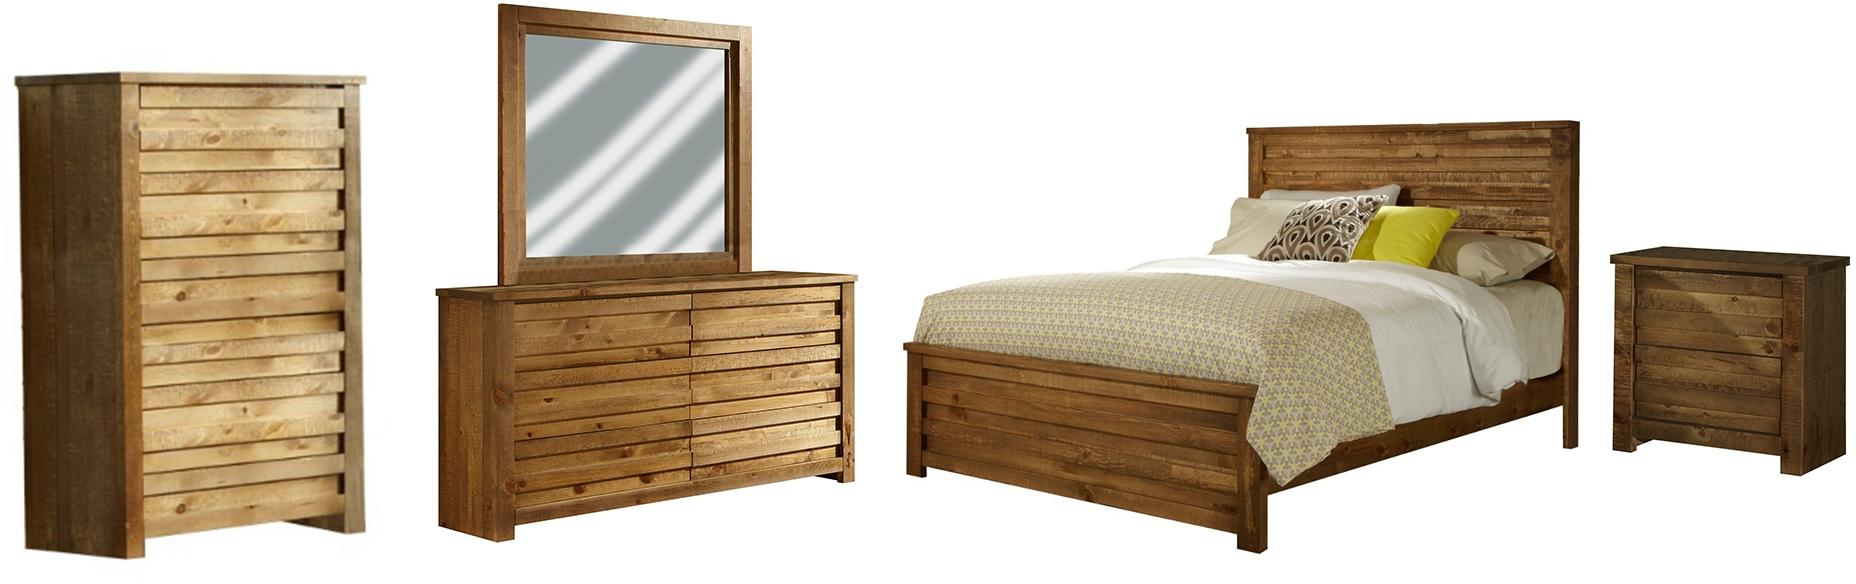 Progressive Furniture Melrose 5 Piece King Size Bedroom Set pertaining to size 1856 X 584